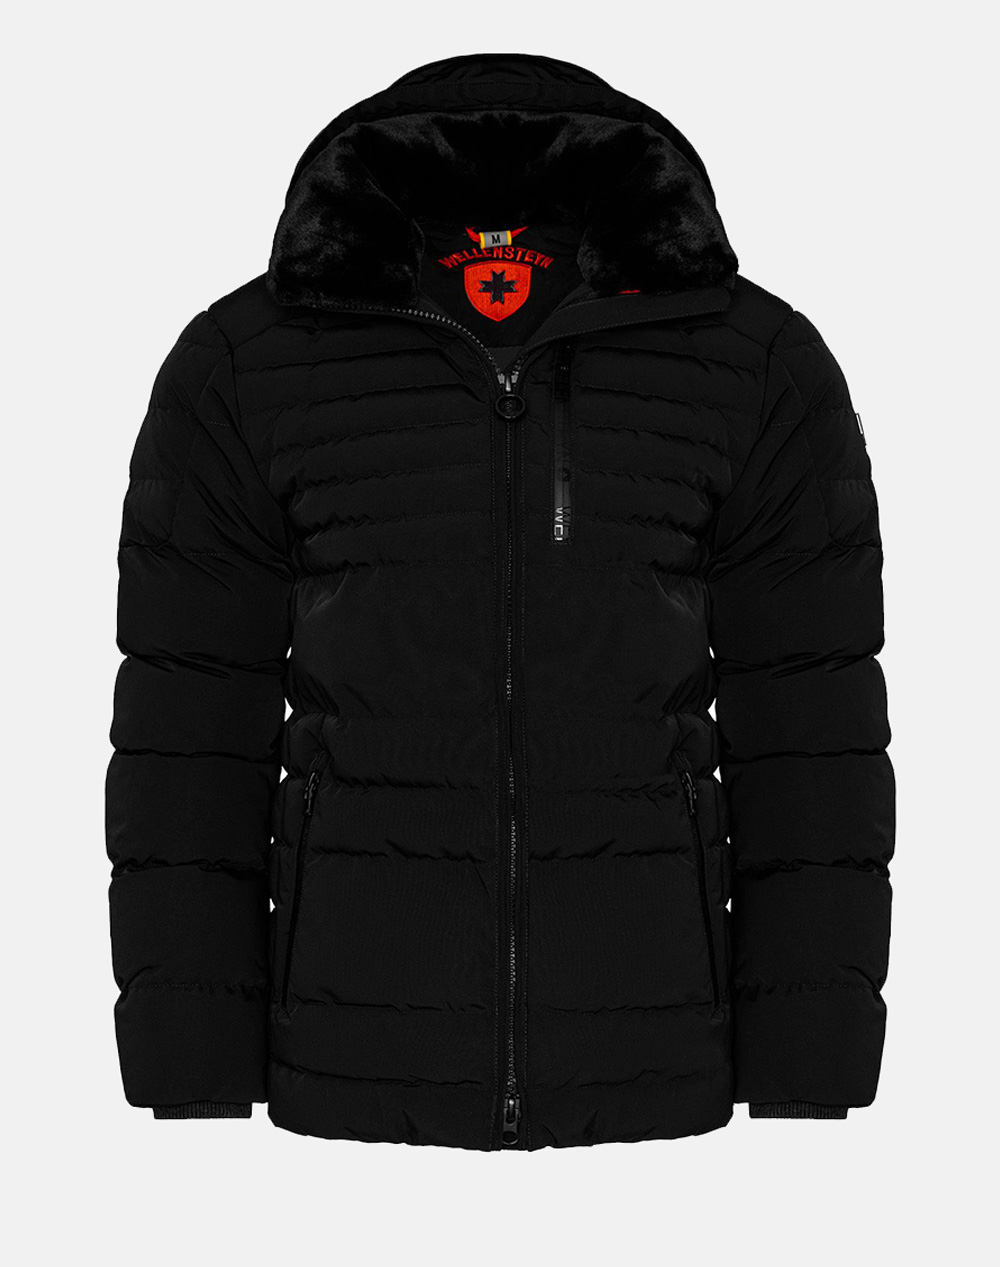 WELLENSTEYN Jacket POLA-870-Schwarz Black